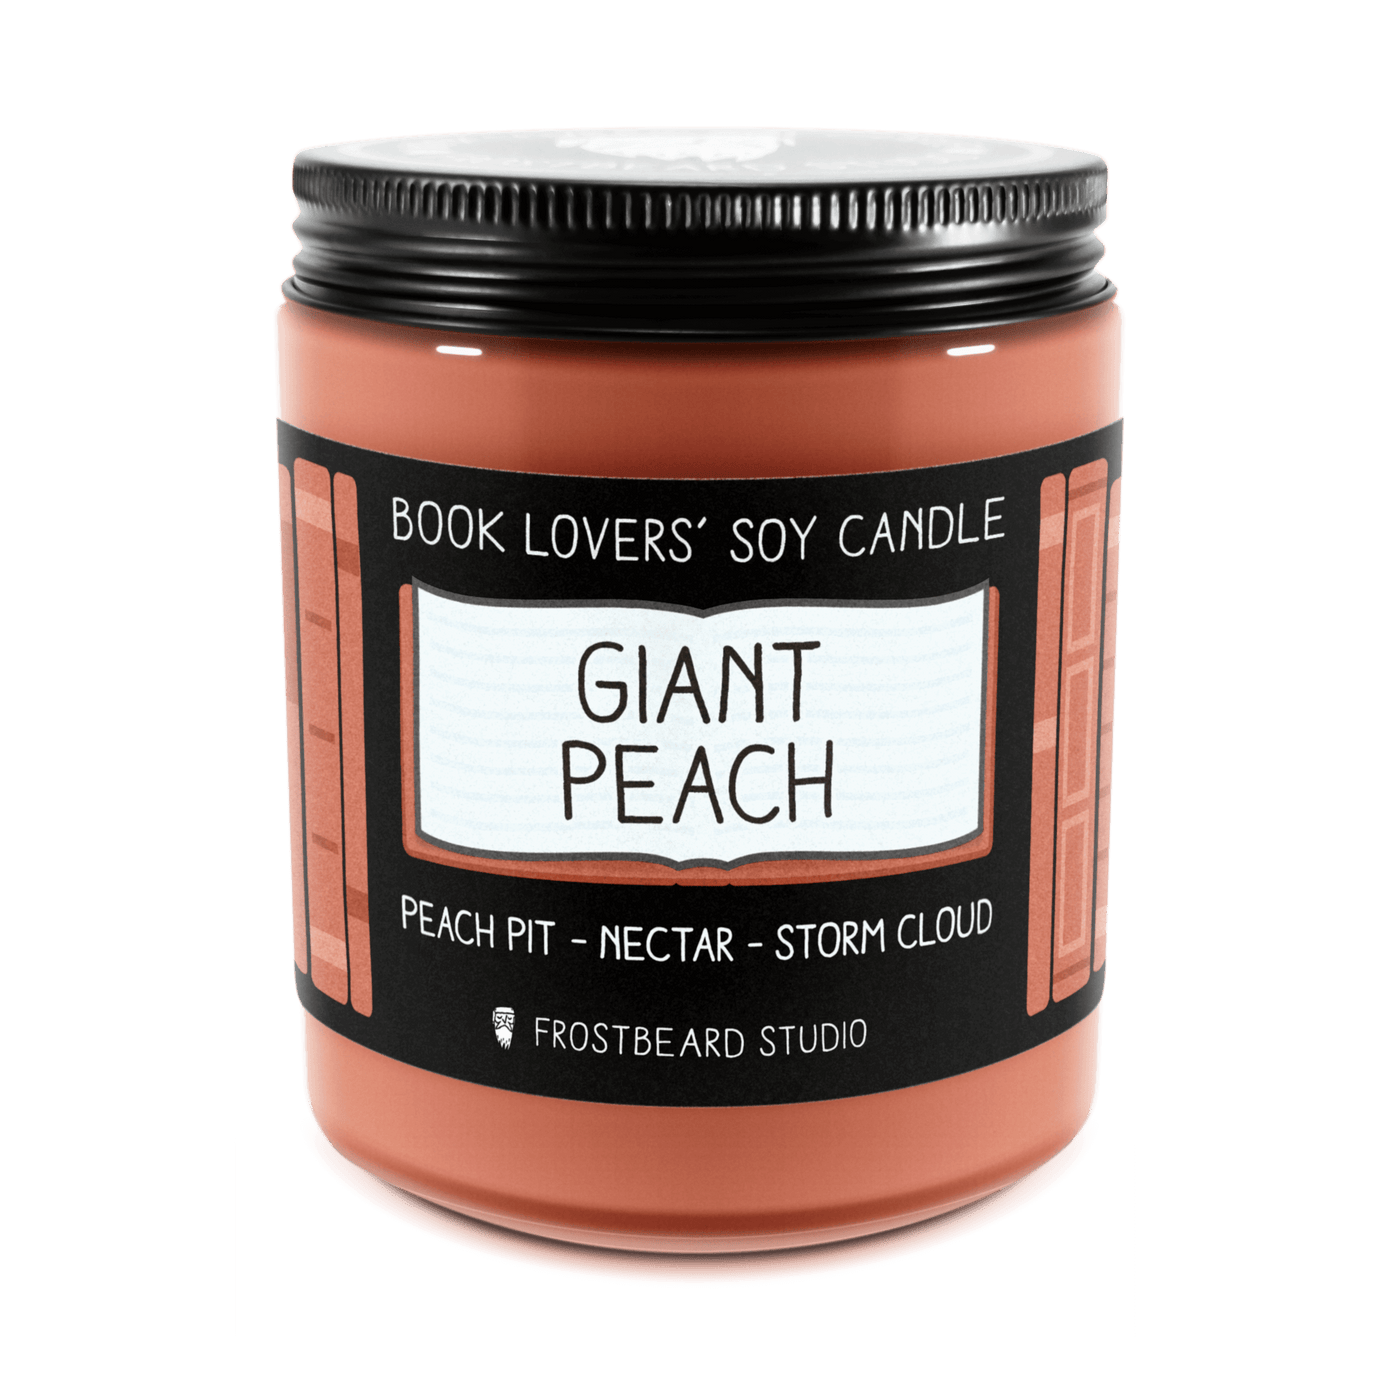 Giant Peach - 8 oz Jar - Book Lovers' Soy Candle - Frostbeard Studio